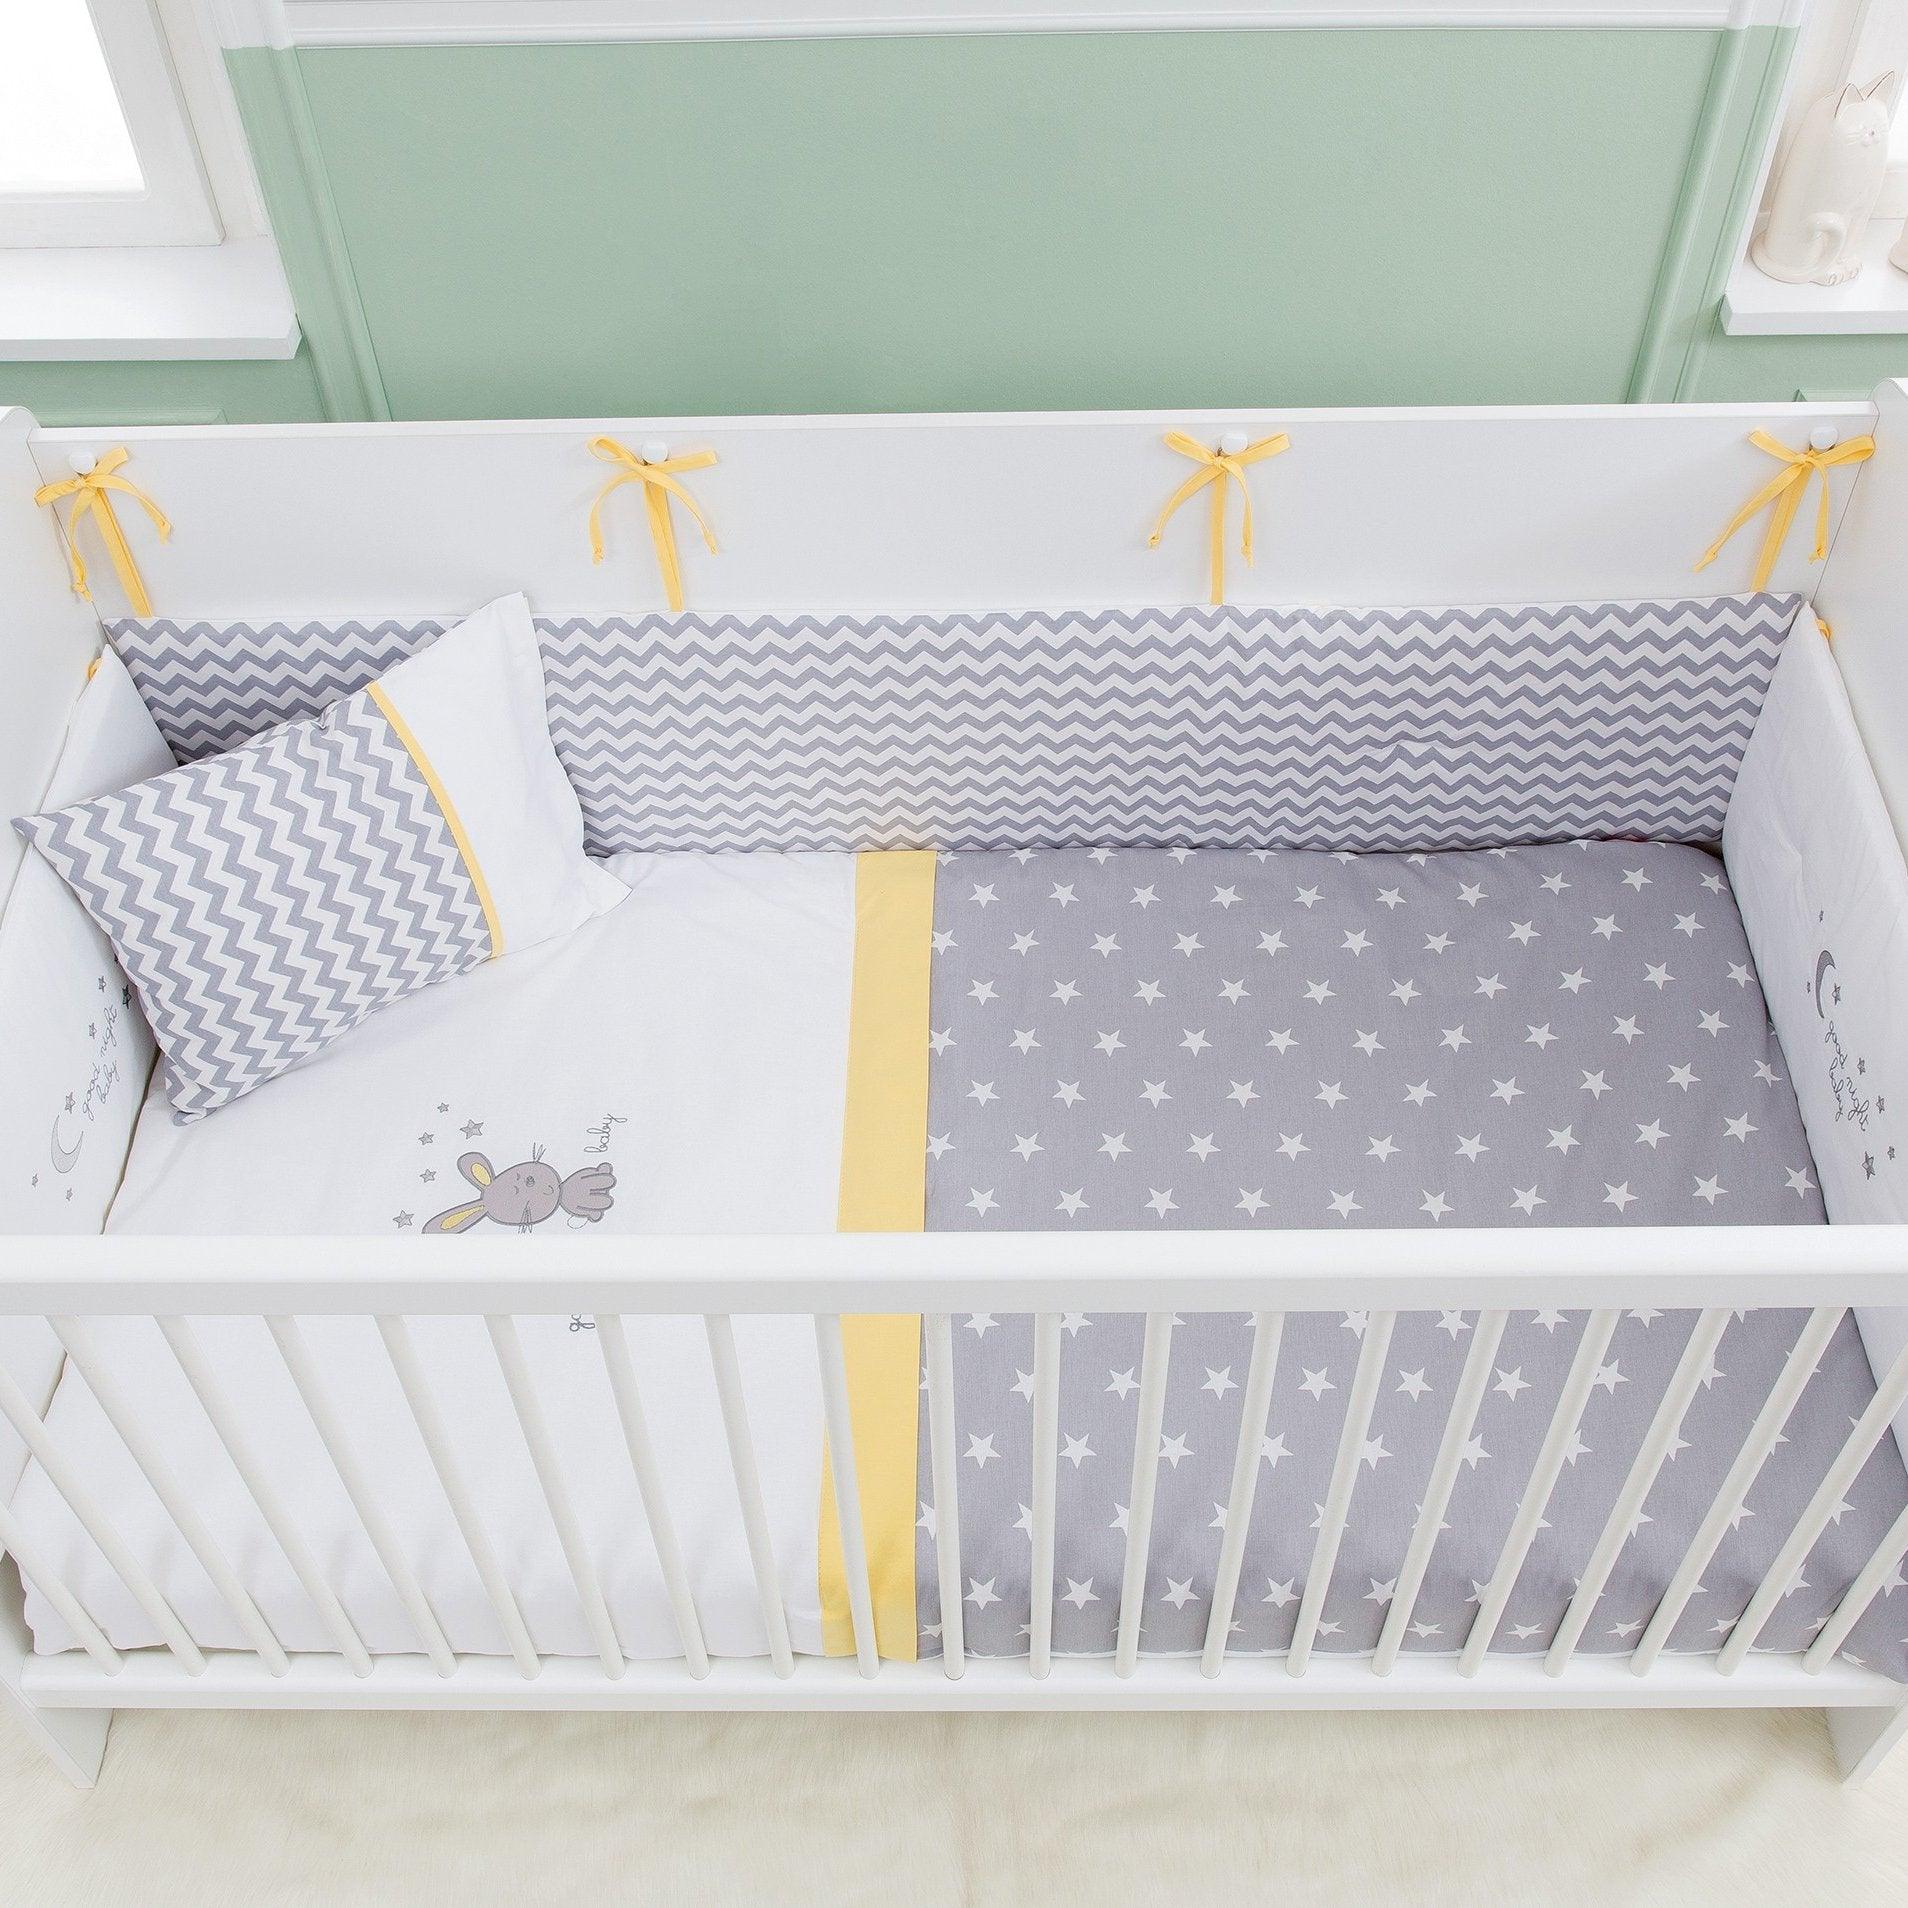 Cilek Montes Baby Bed (60X120 Cm) - Kids Haven